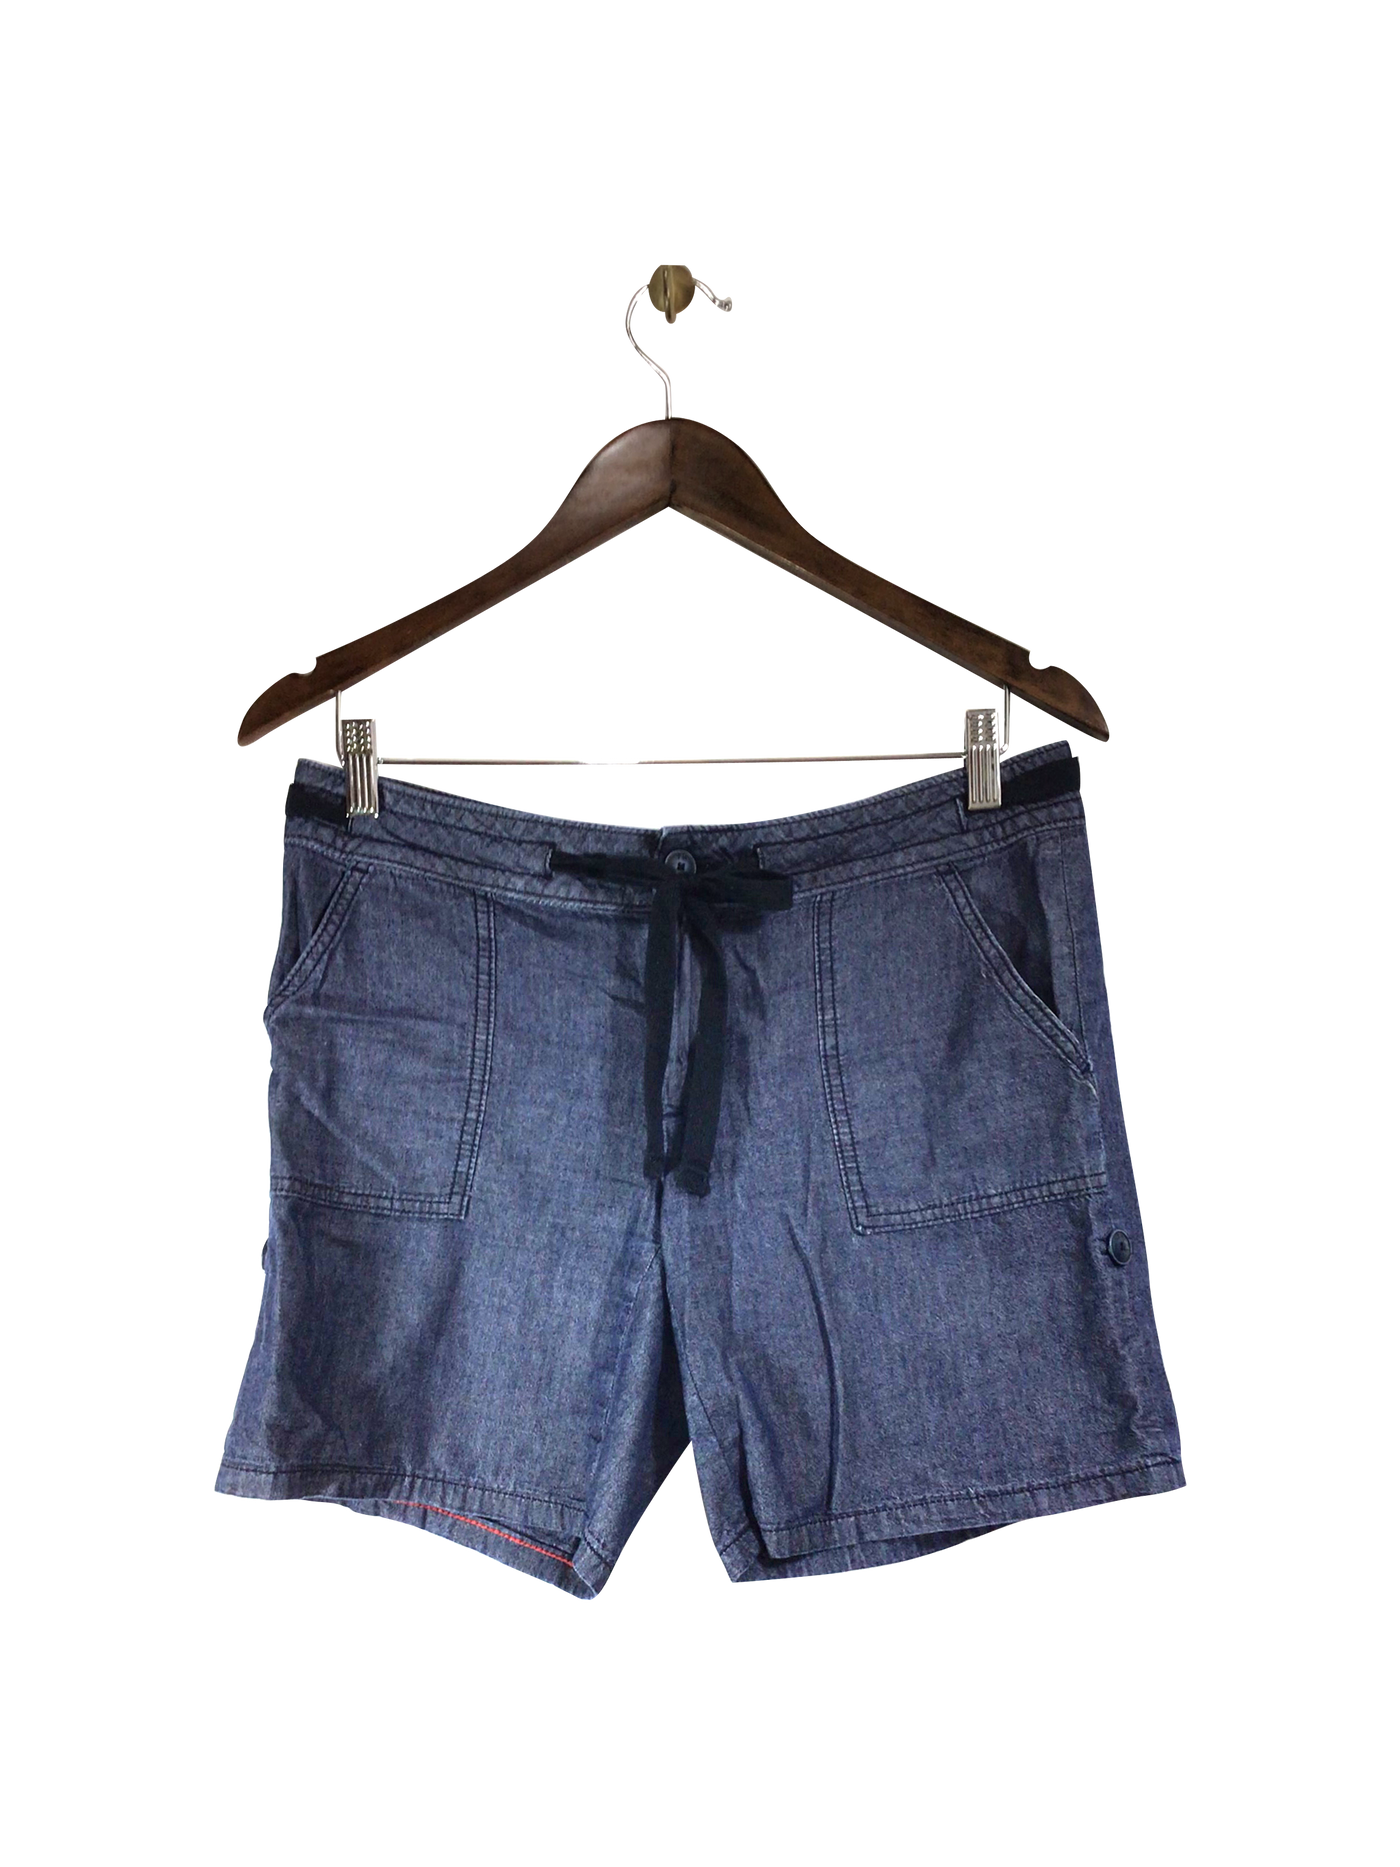 TOMMY HILFIGER Women Denim Shorts Regular fit in Blue - Size 2 | 26.5 $ KOOP